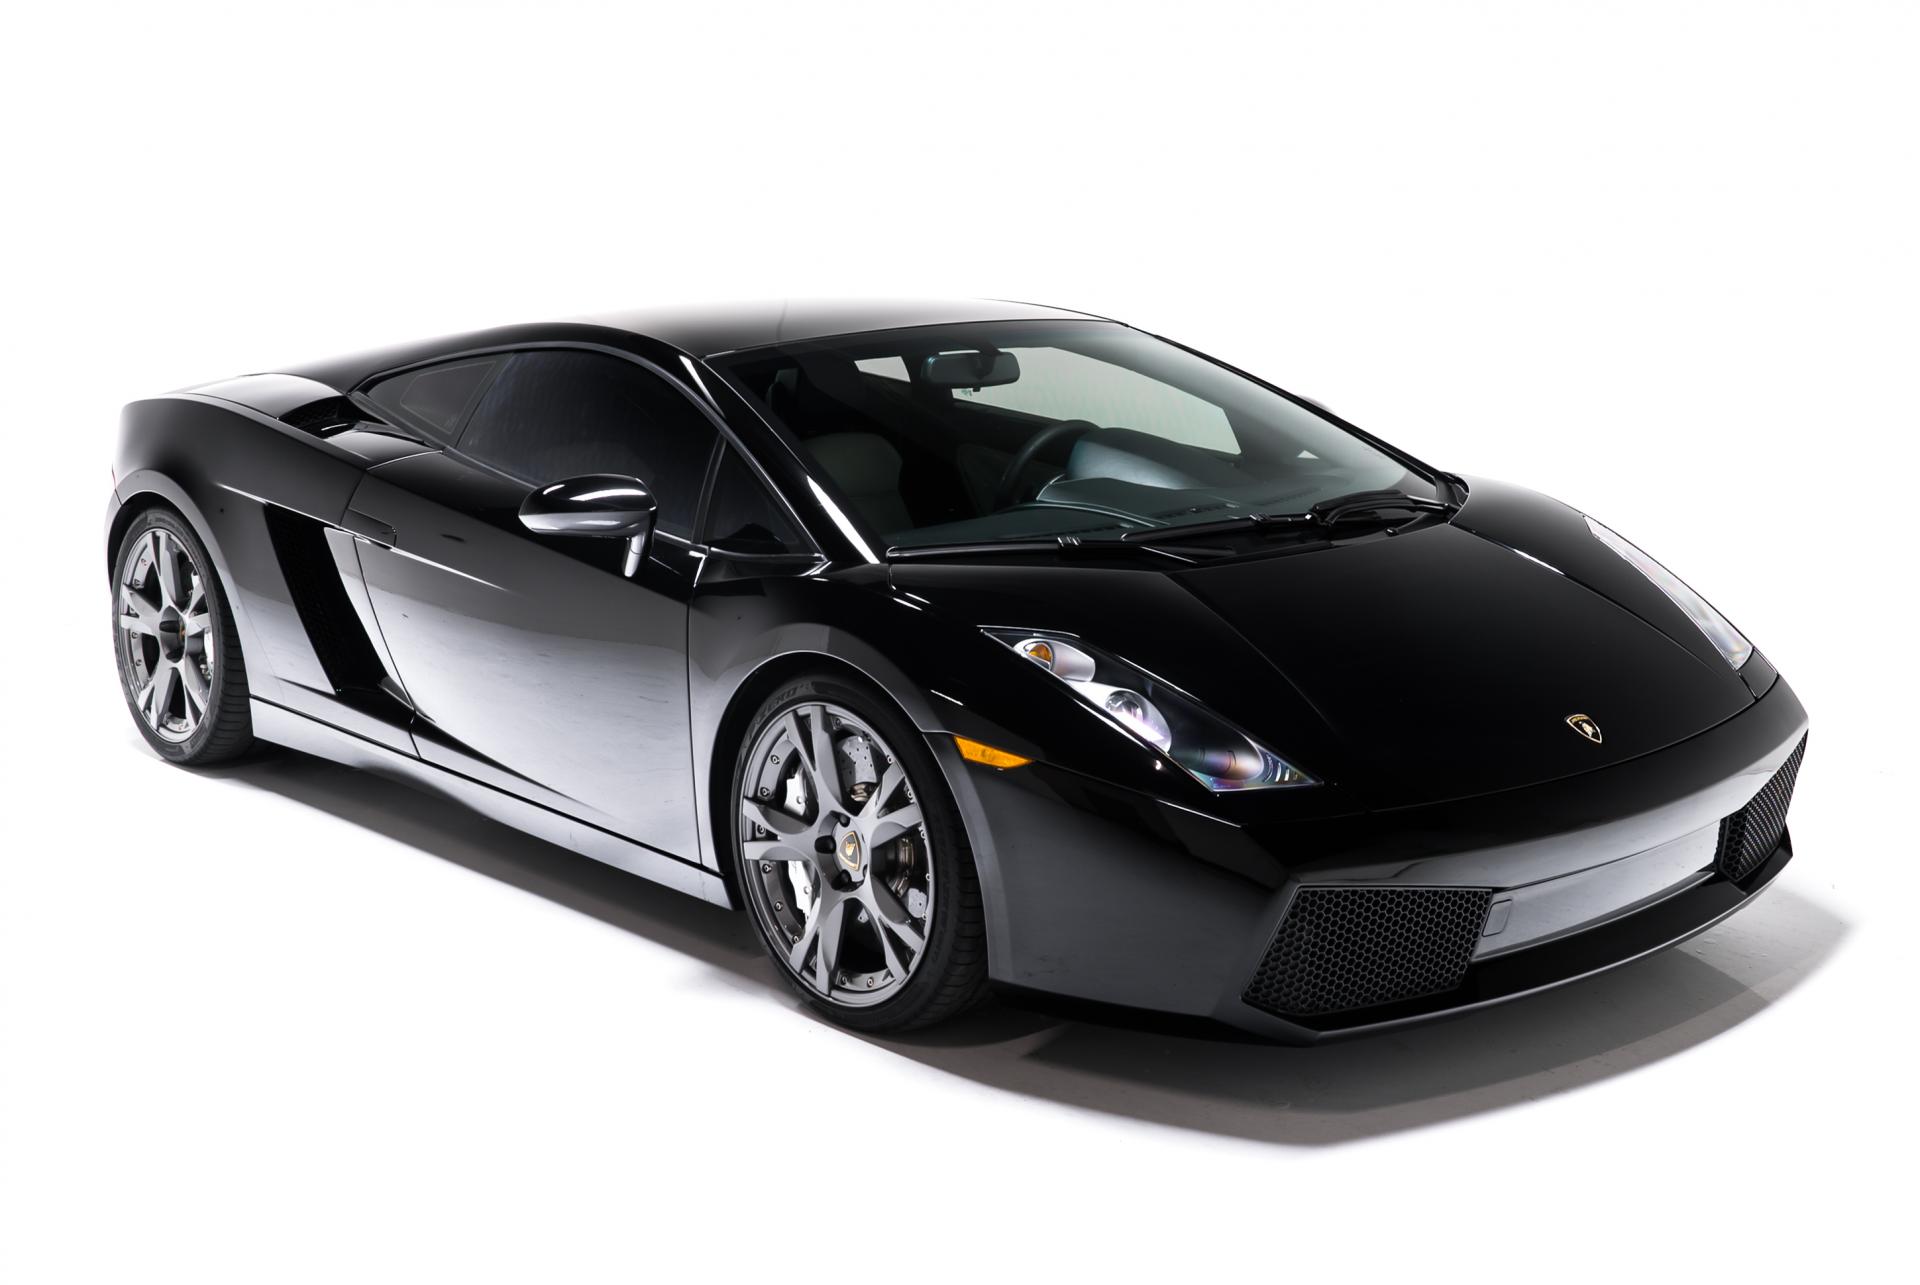 Used 2008 Lamborghini Gallardo For Sale (Sold) | West Coast Exotic Cars  Stock #sold23